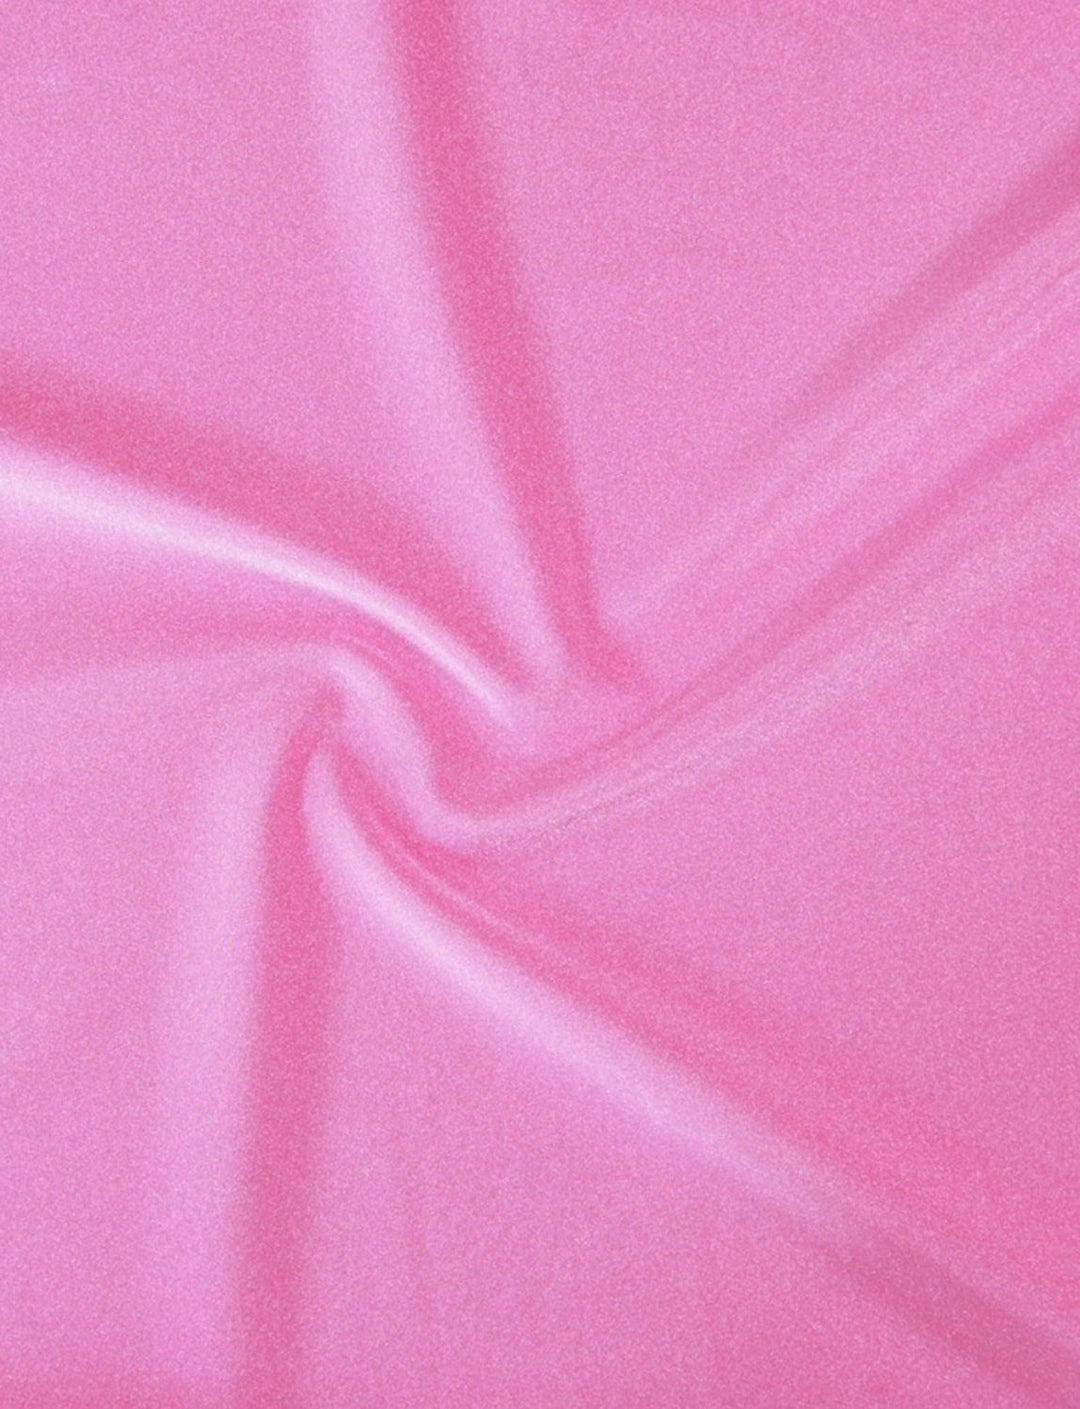 plain pink lycra fabric swatch